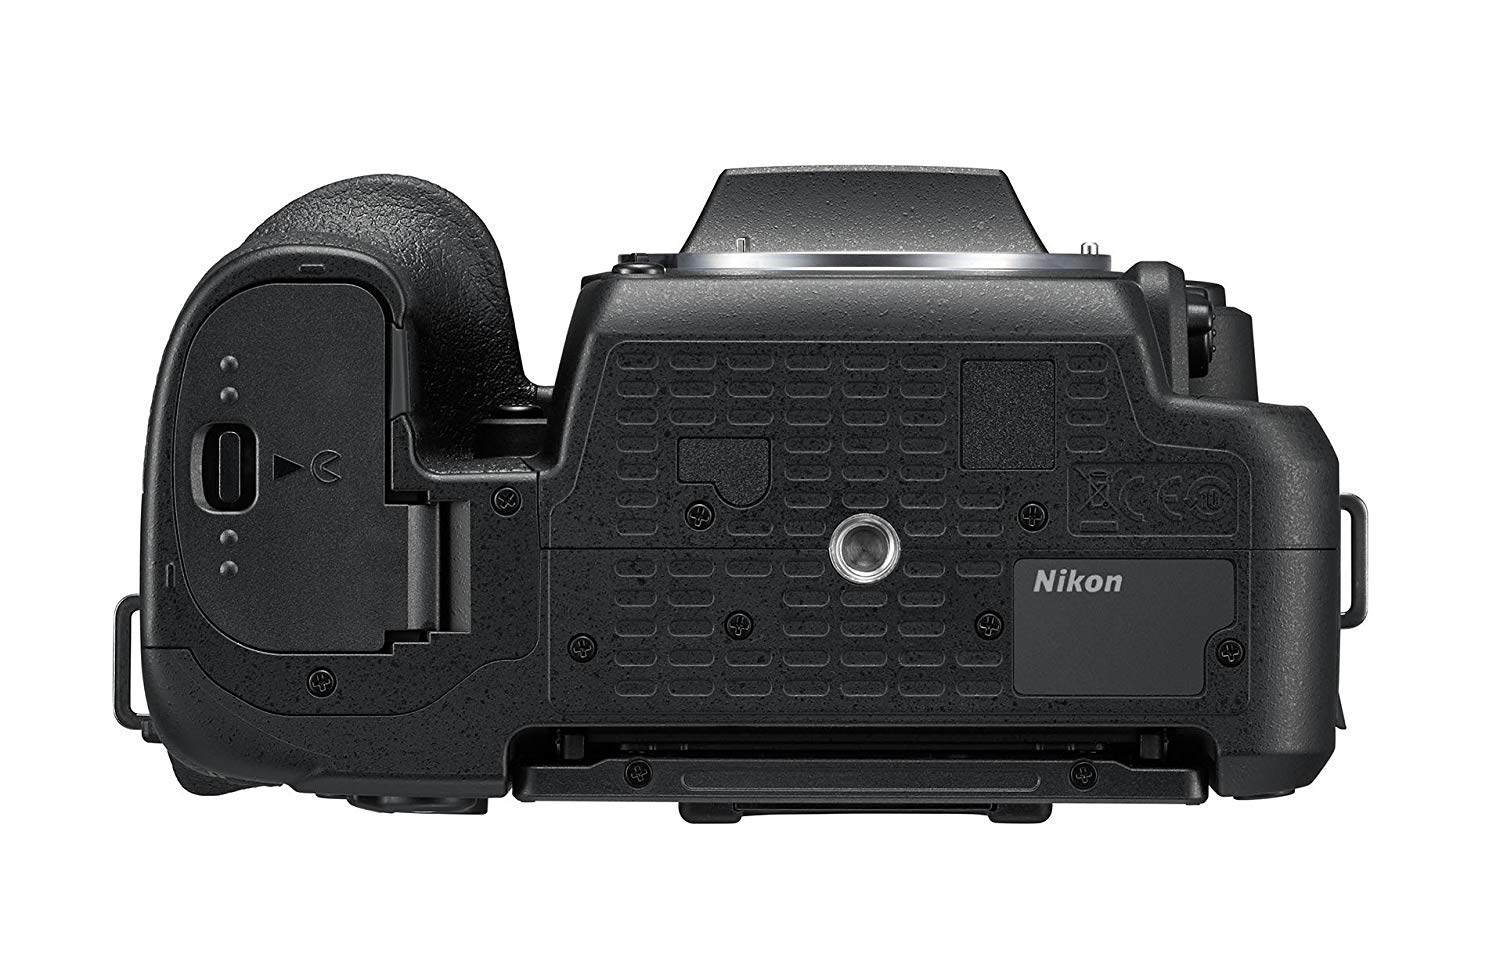 Nikon D7500 DX-Format Digital SLR Body